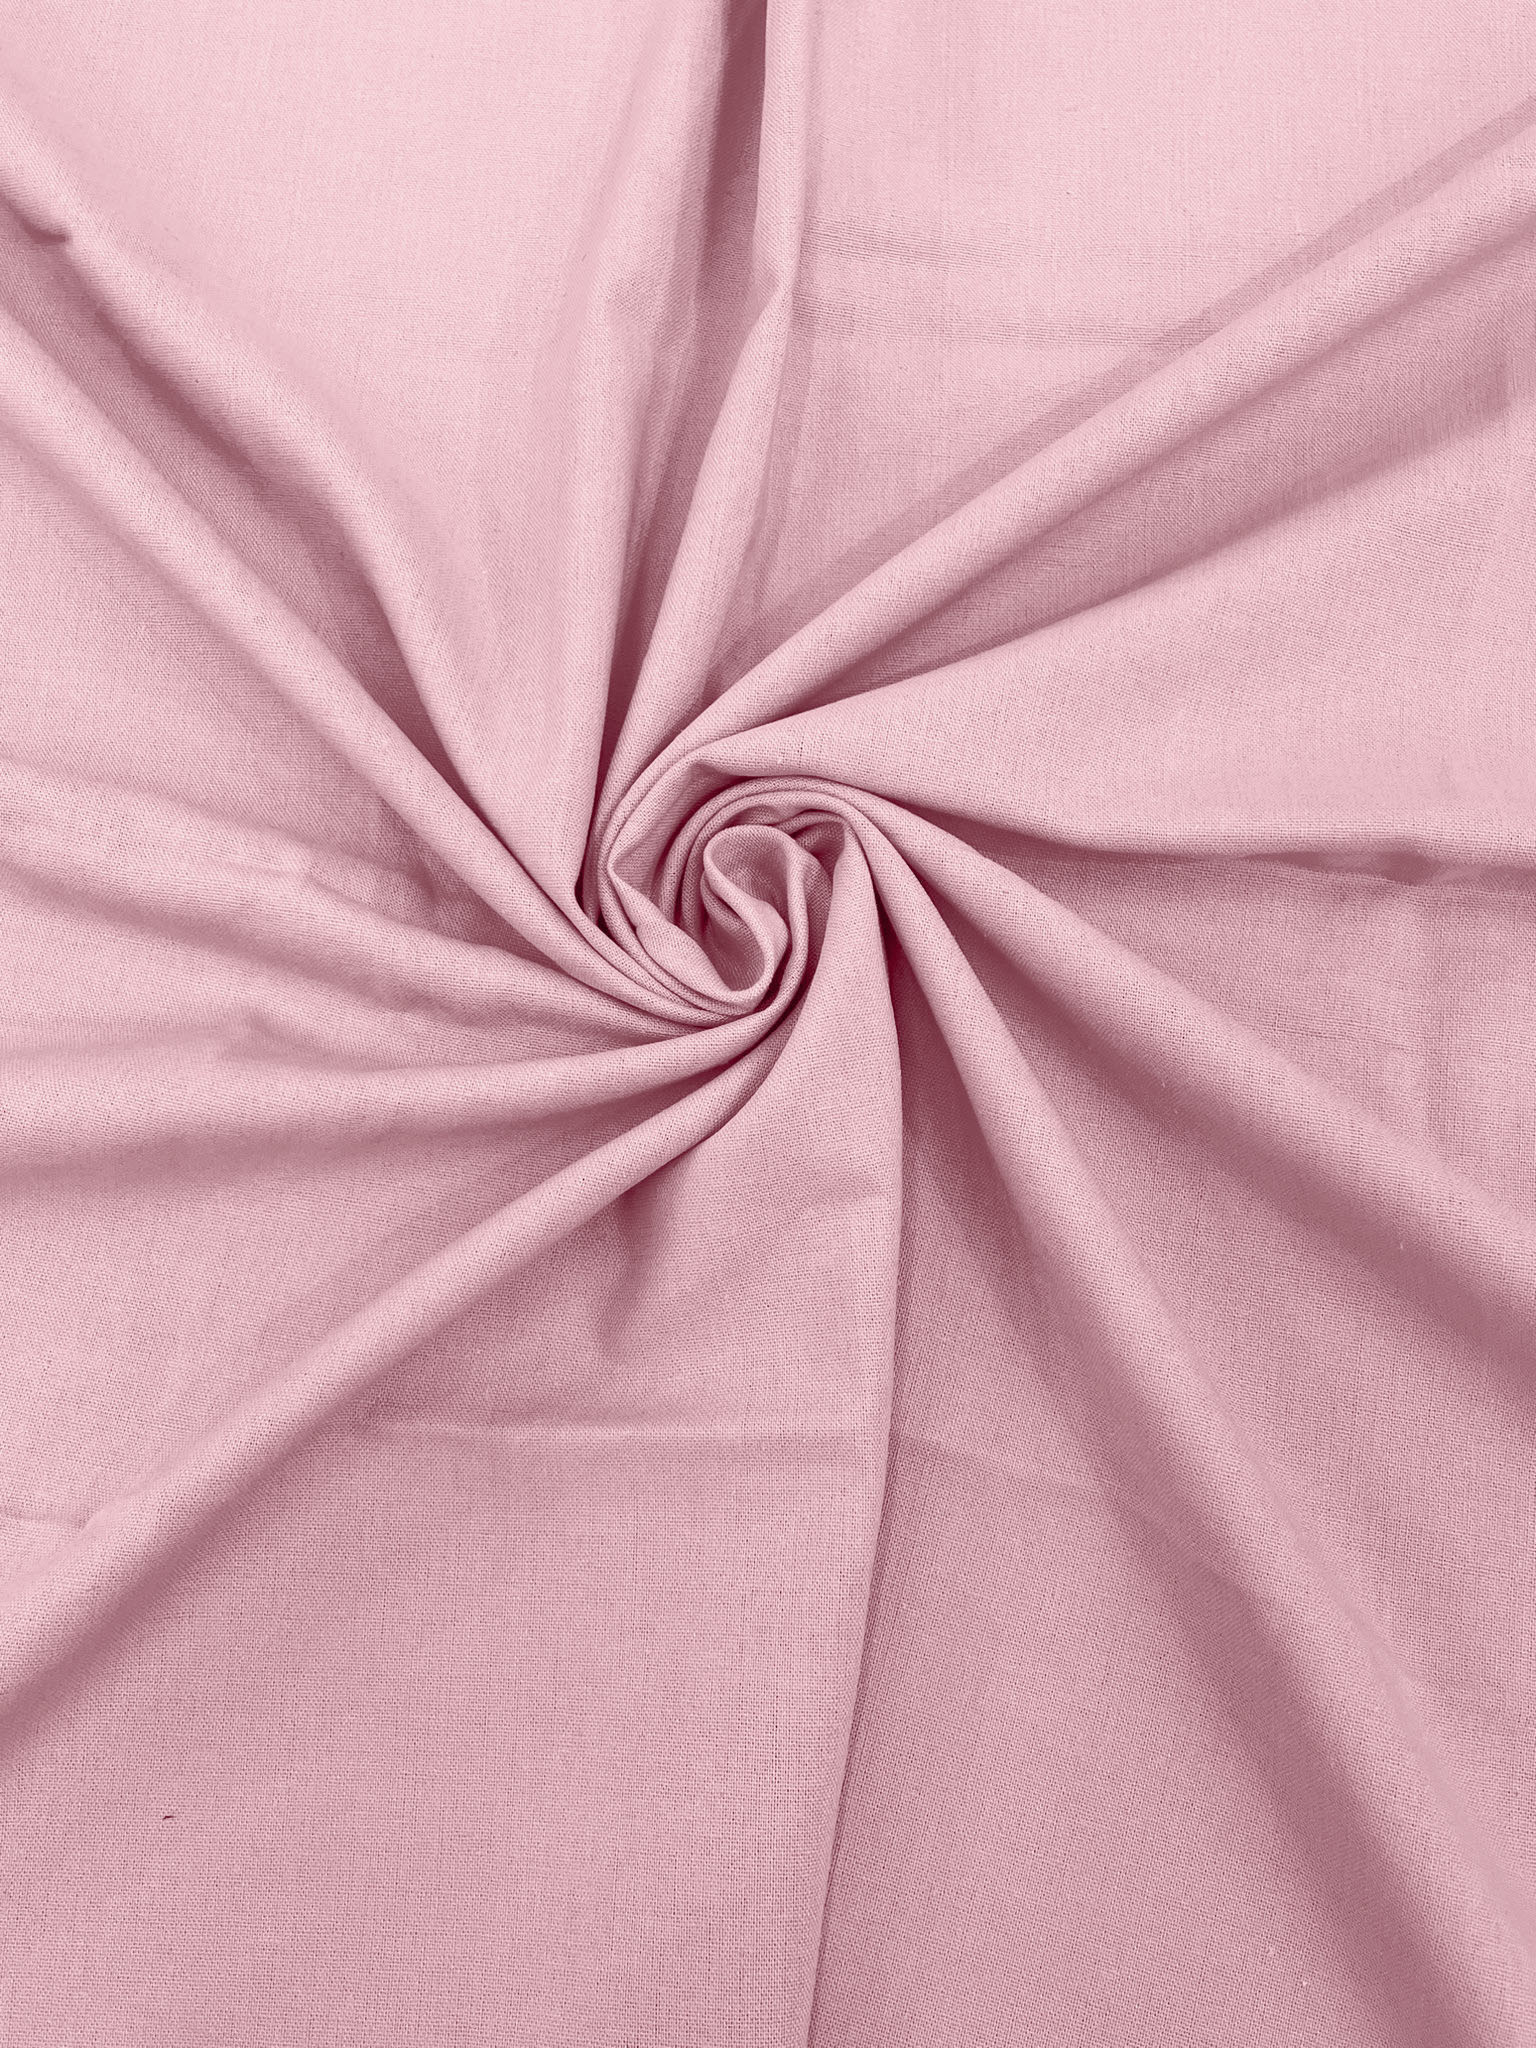 Pink Medium Weight Natural Linen Fabric/50 " Wide/Clothing